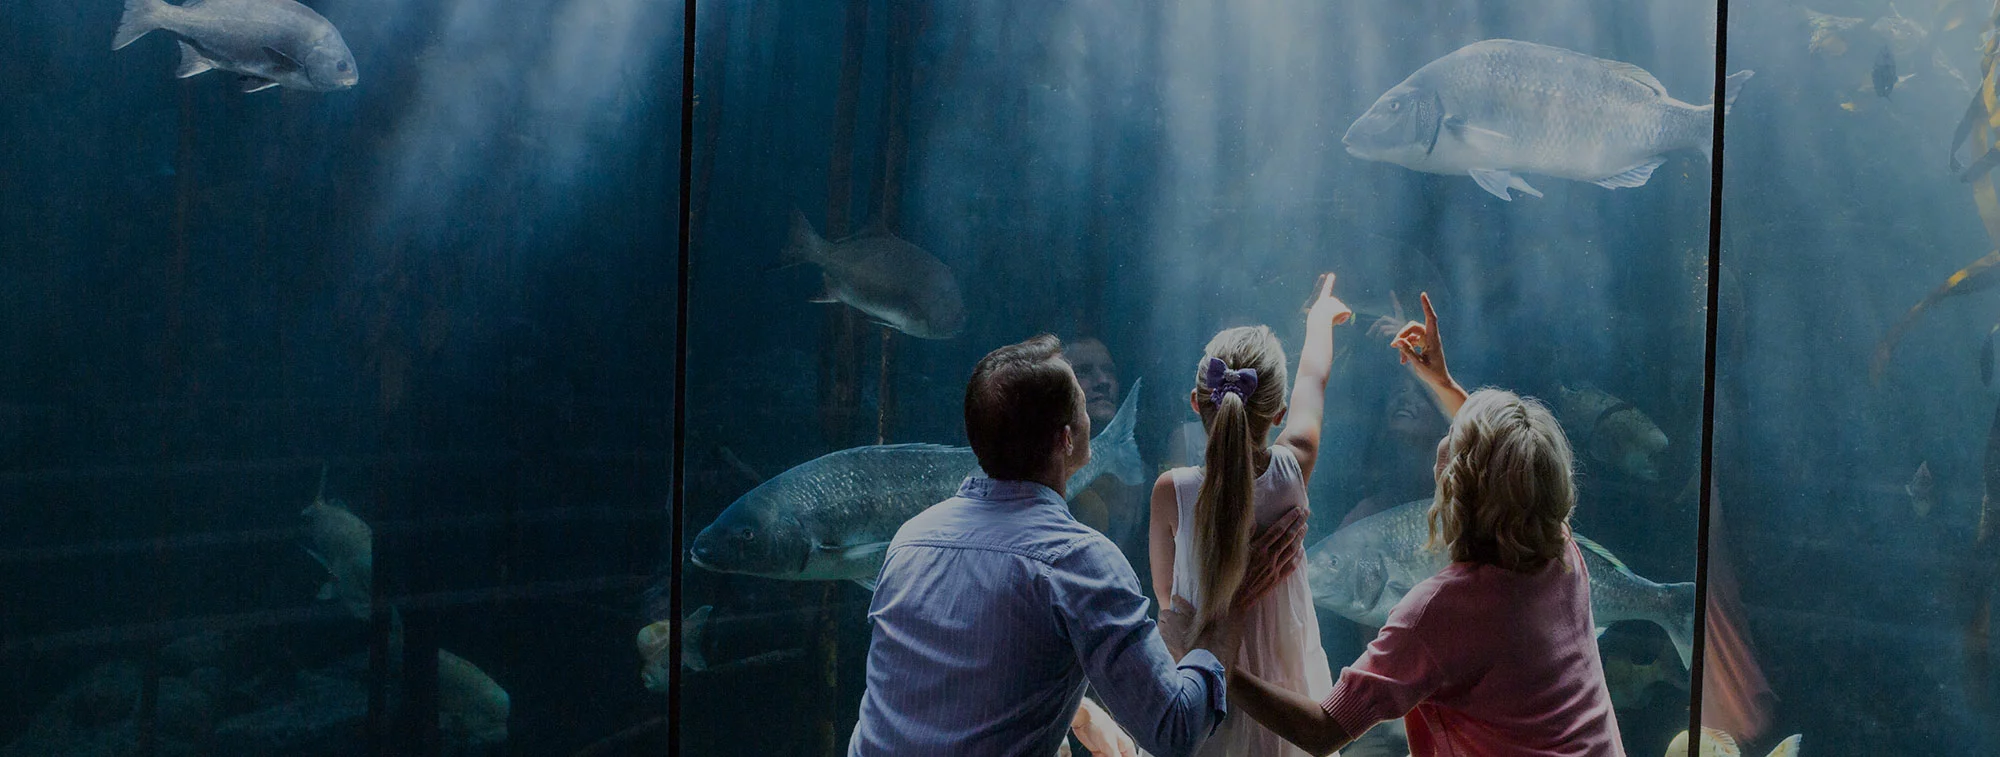 family at Ripley's Aquarium of the Smokies